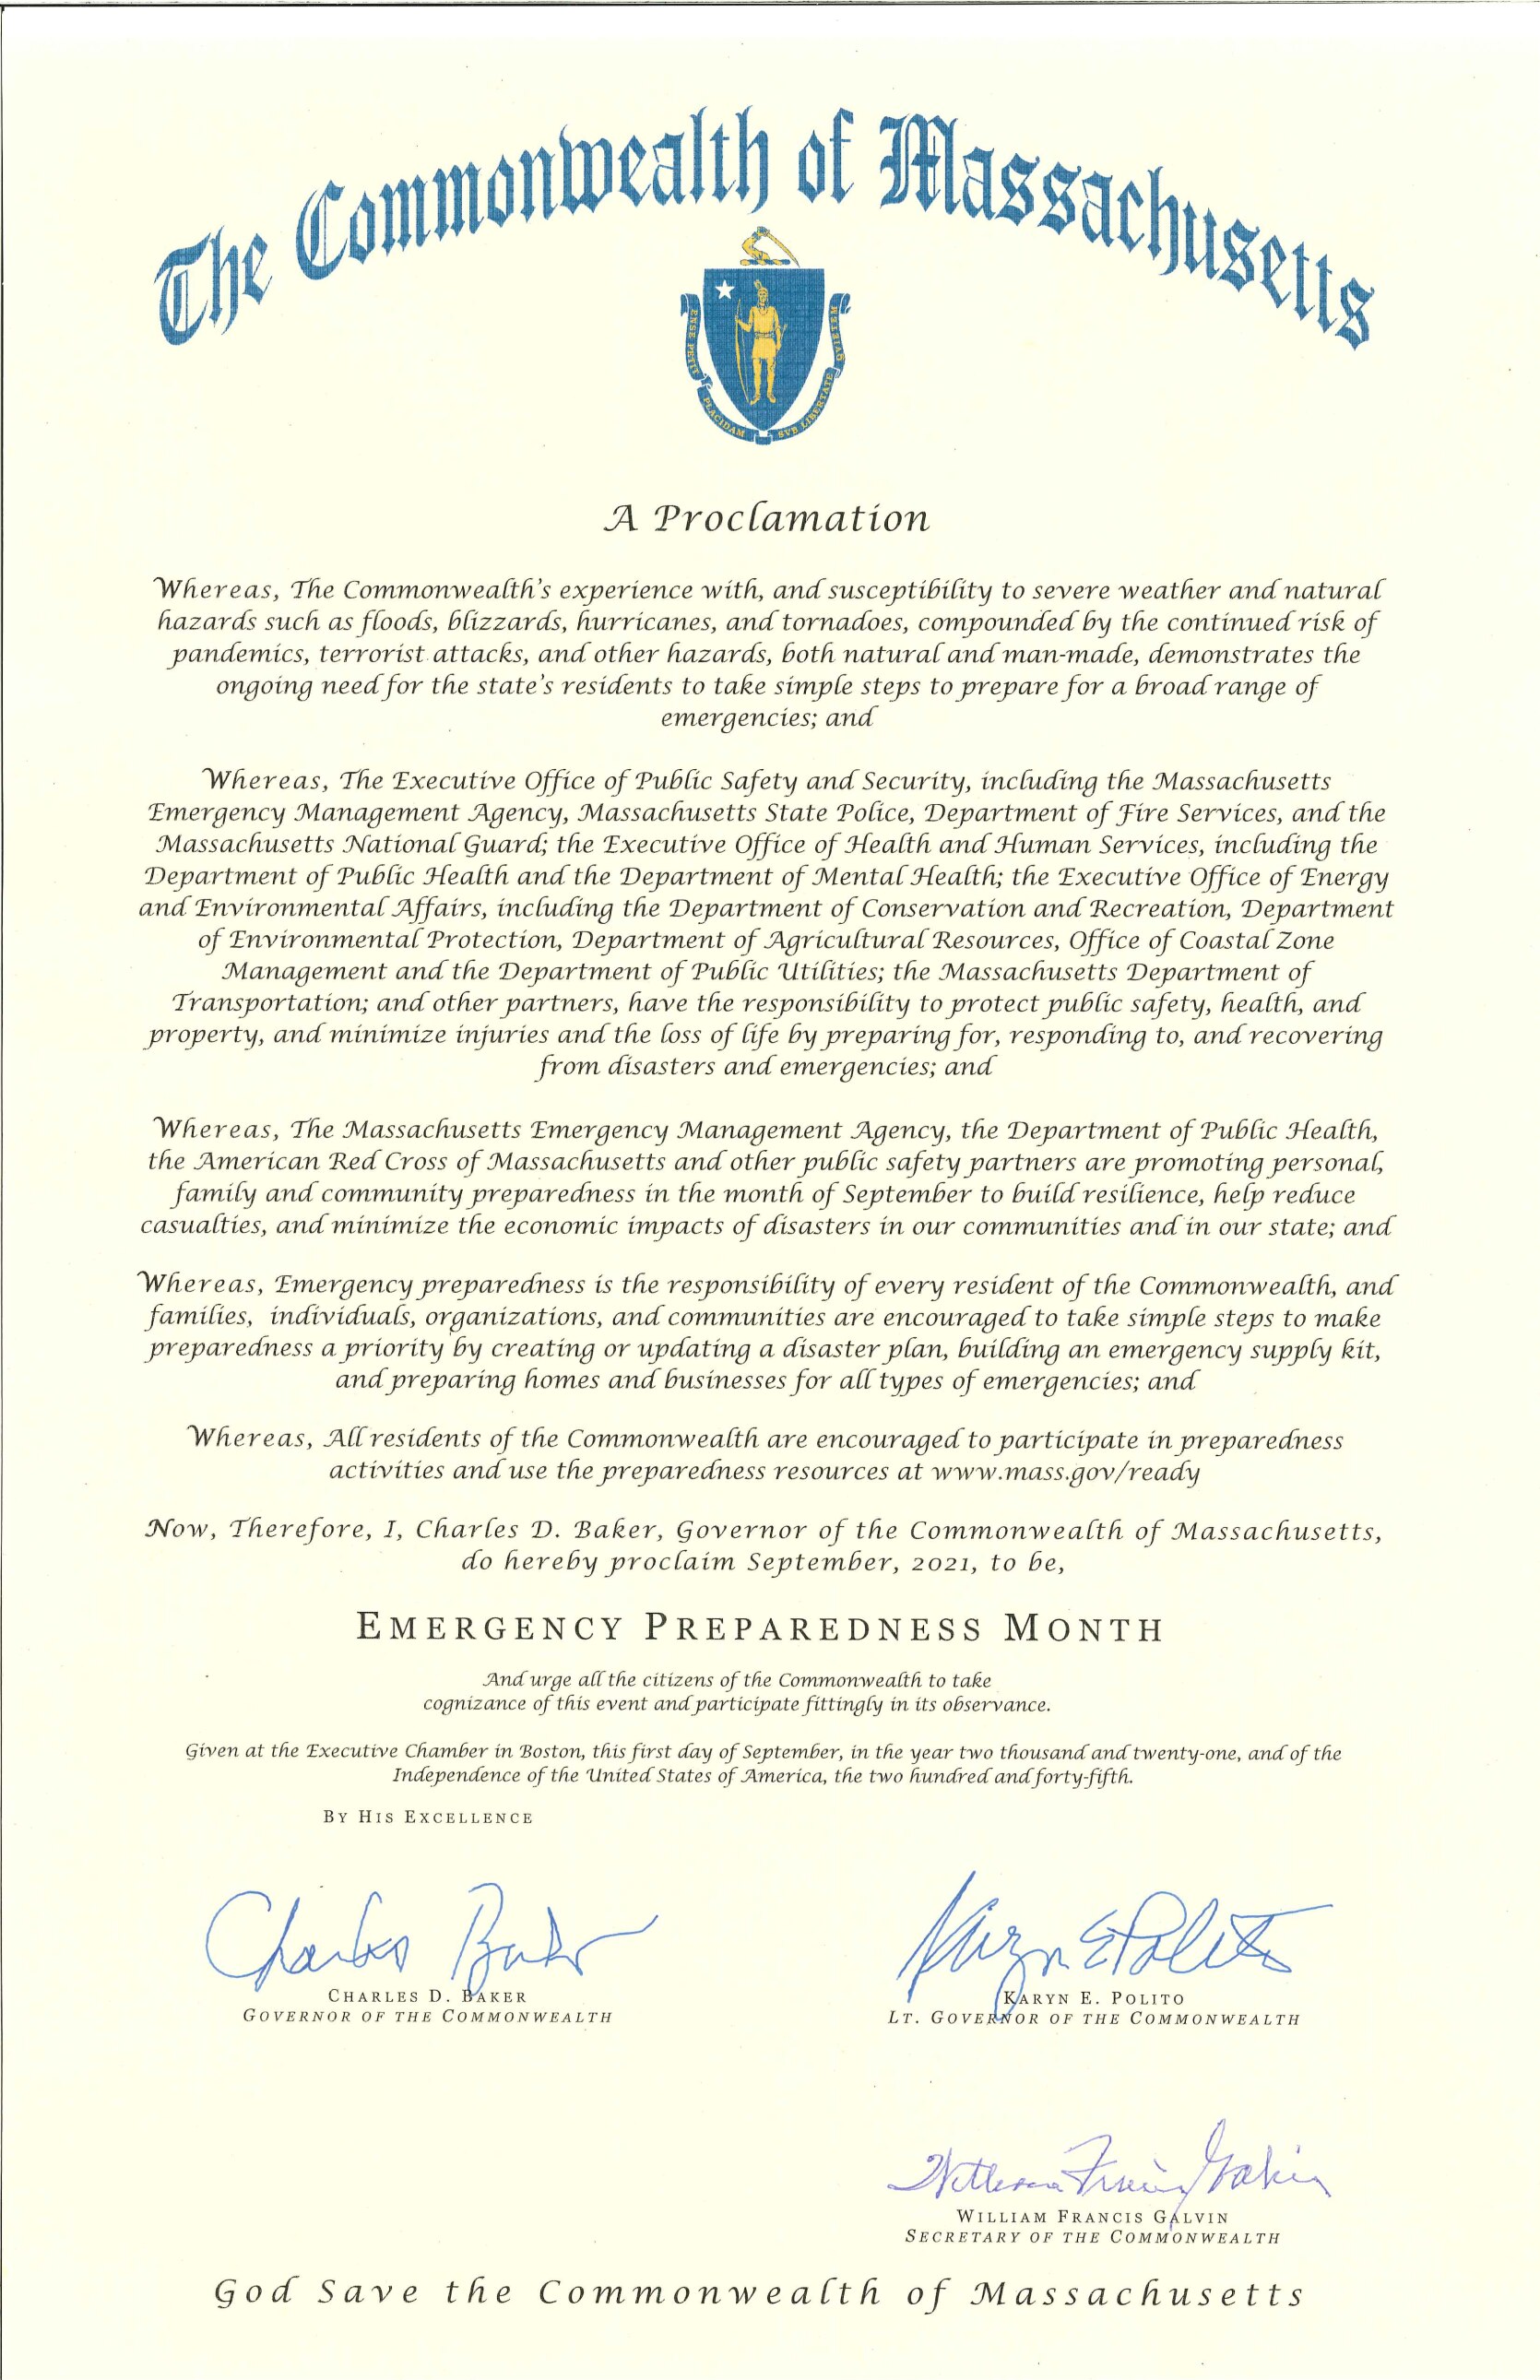 Governor Baker proclaims September to be emergency preparedness month.